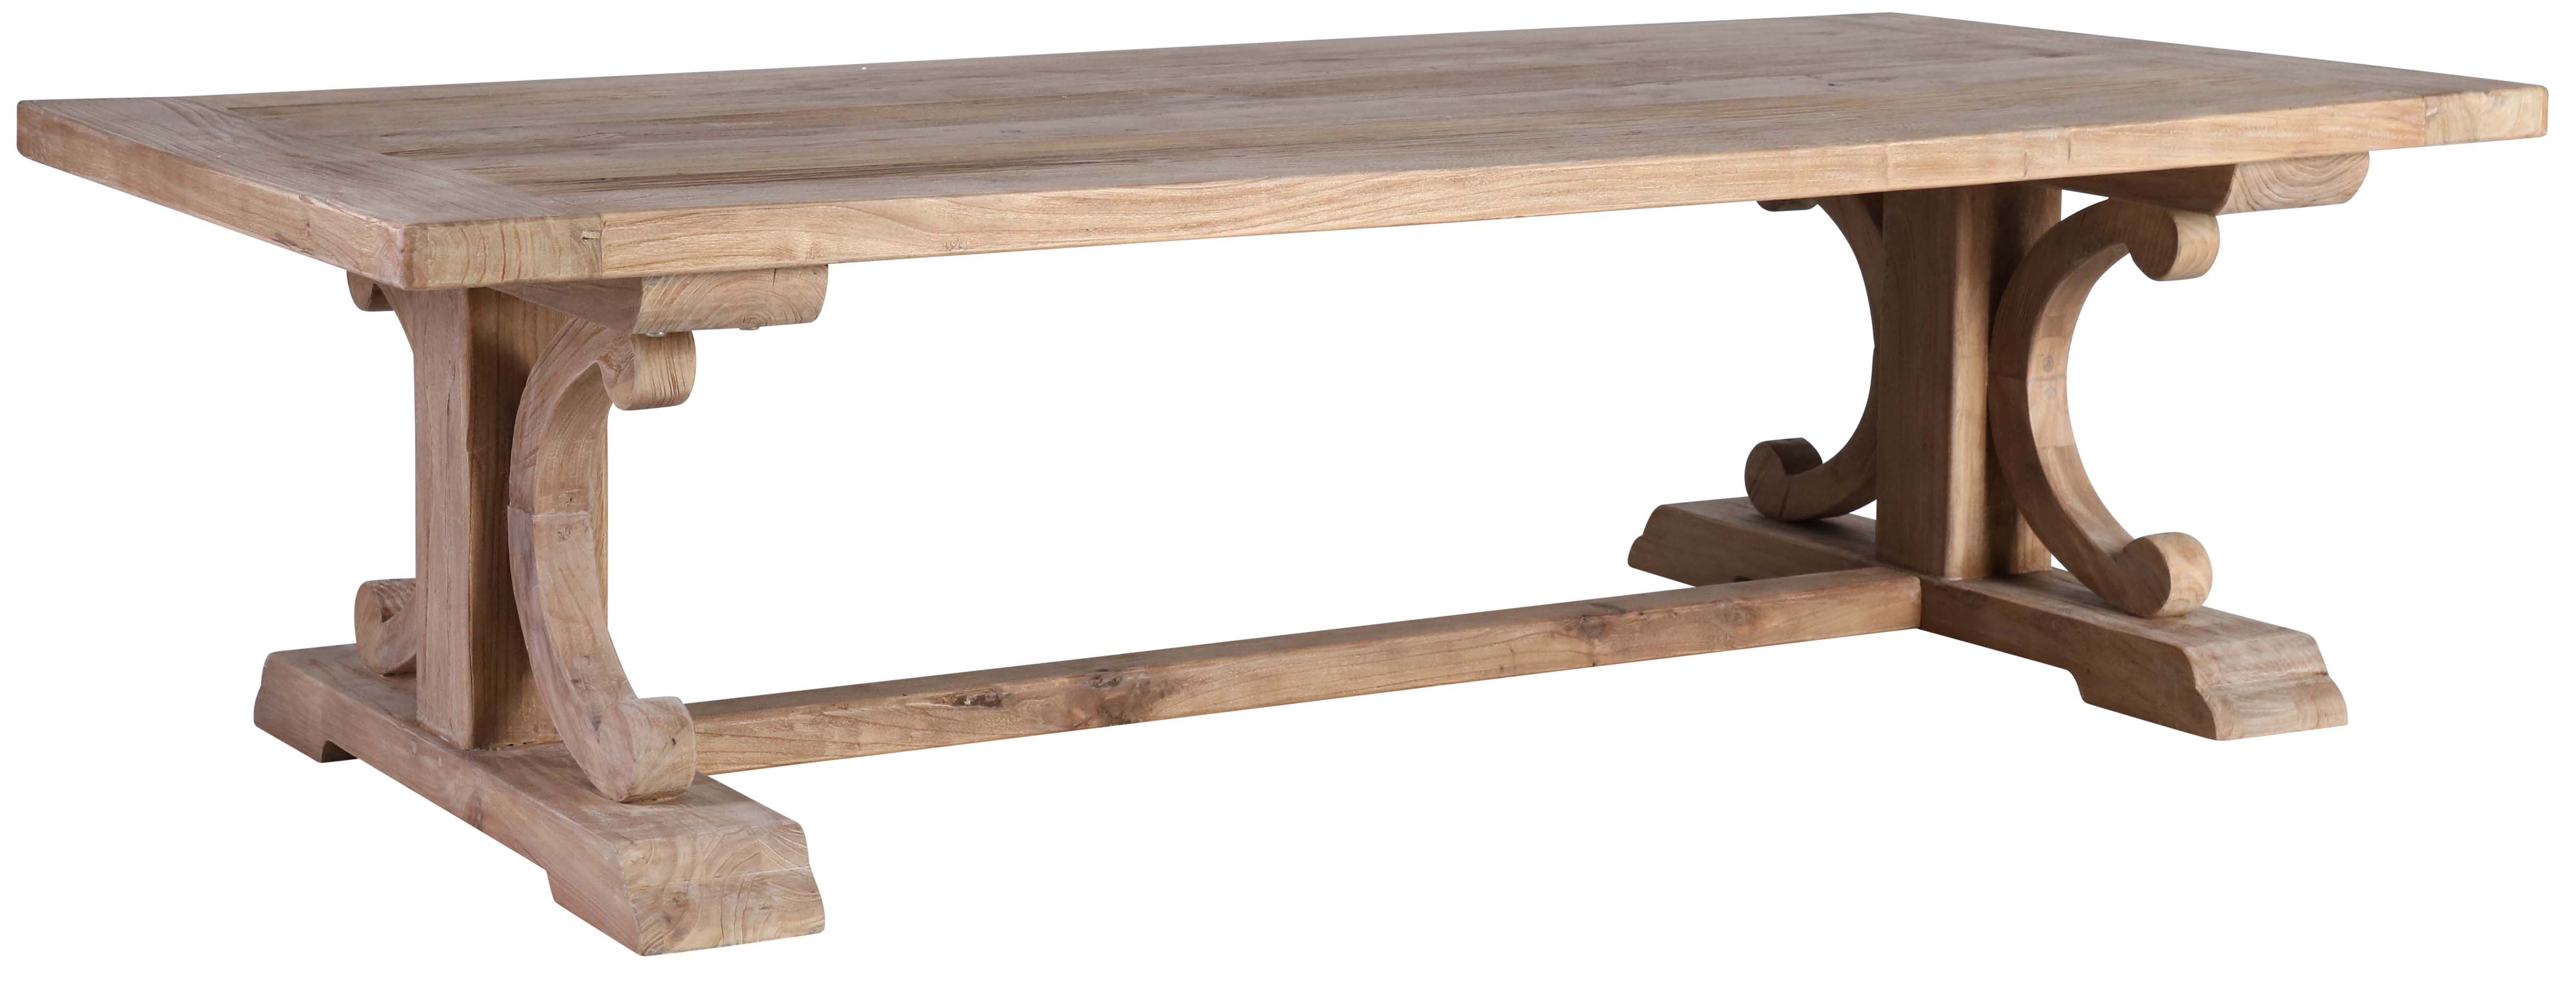 Block & Chisel rectangular wooden coffee table